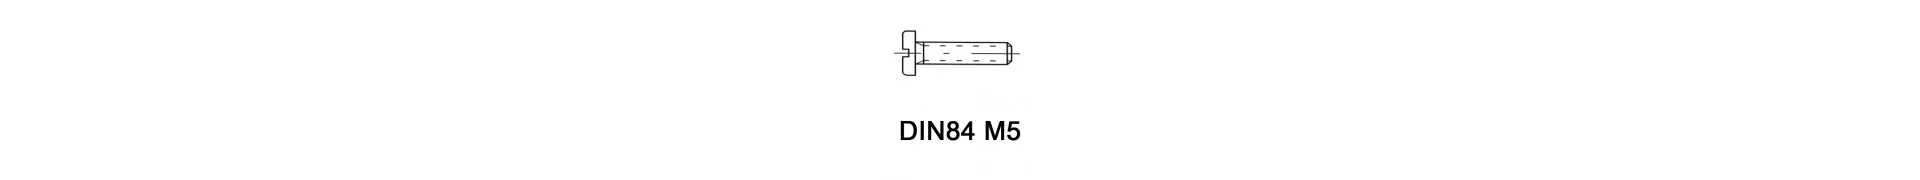 DIN84 M5